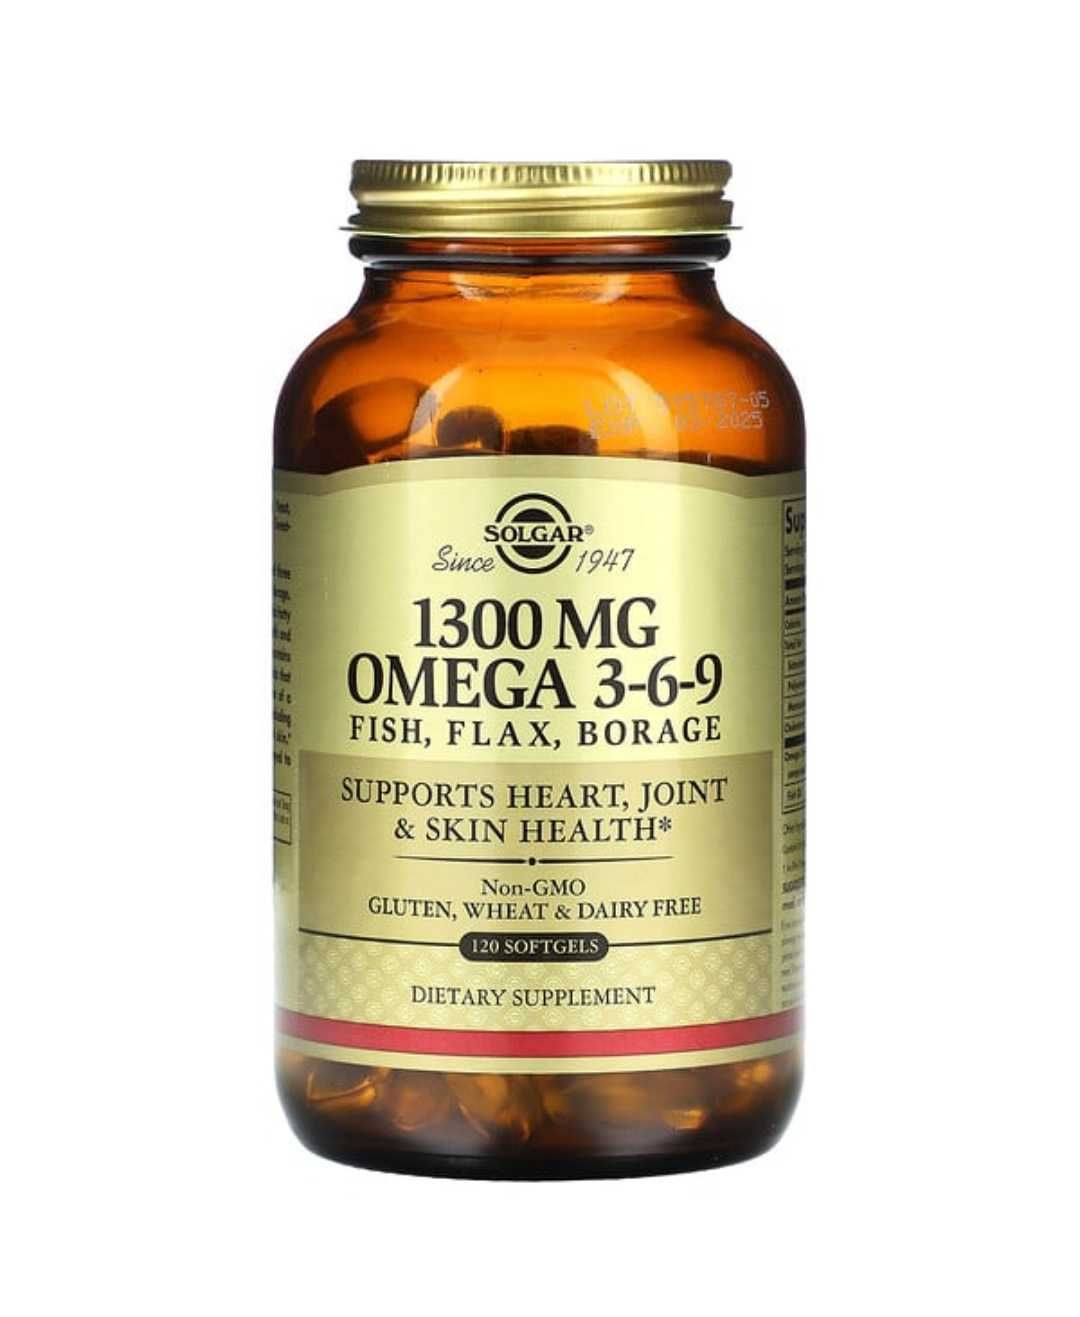 Solgar Omega 3-6-9 из США 1300 mg